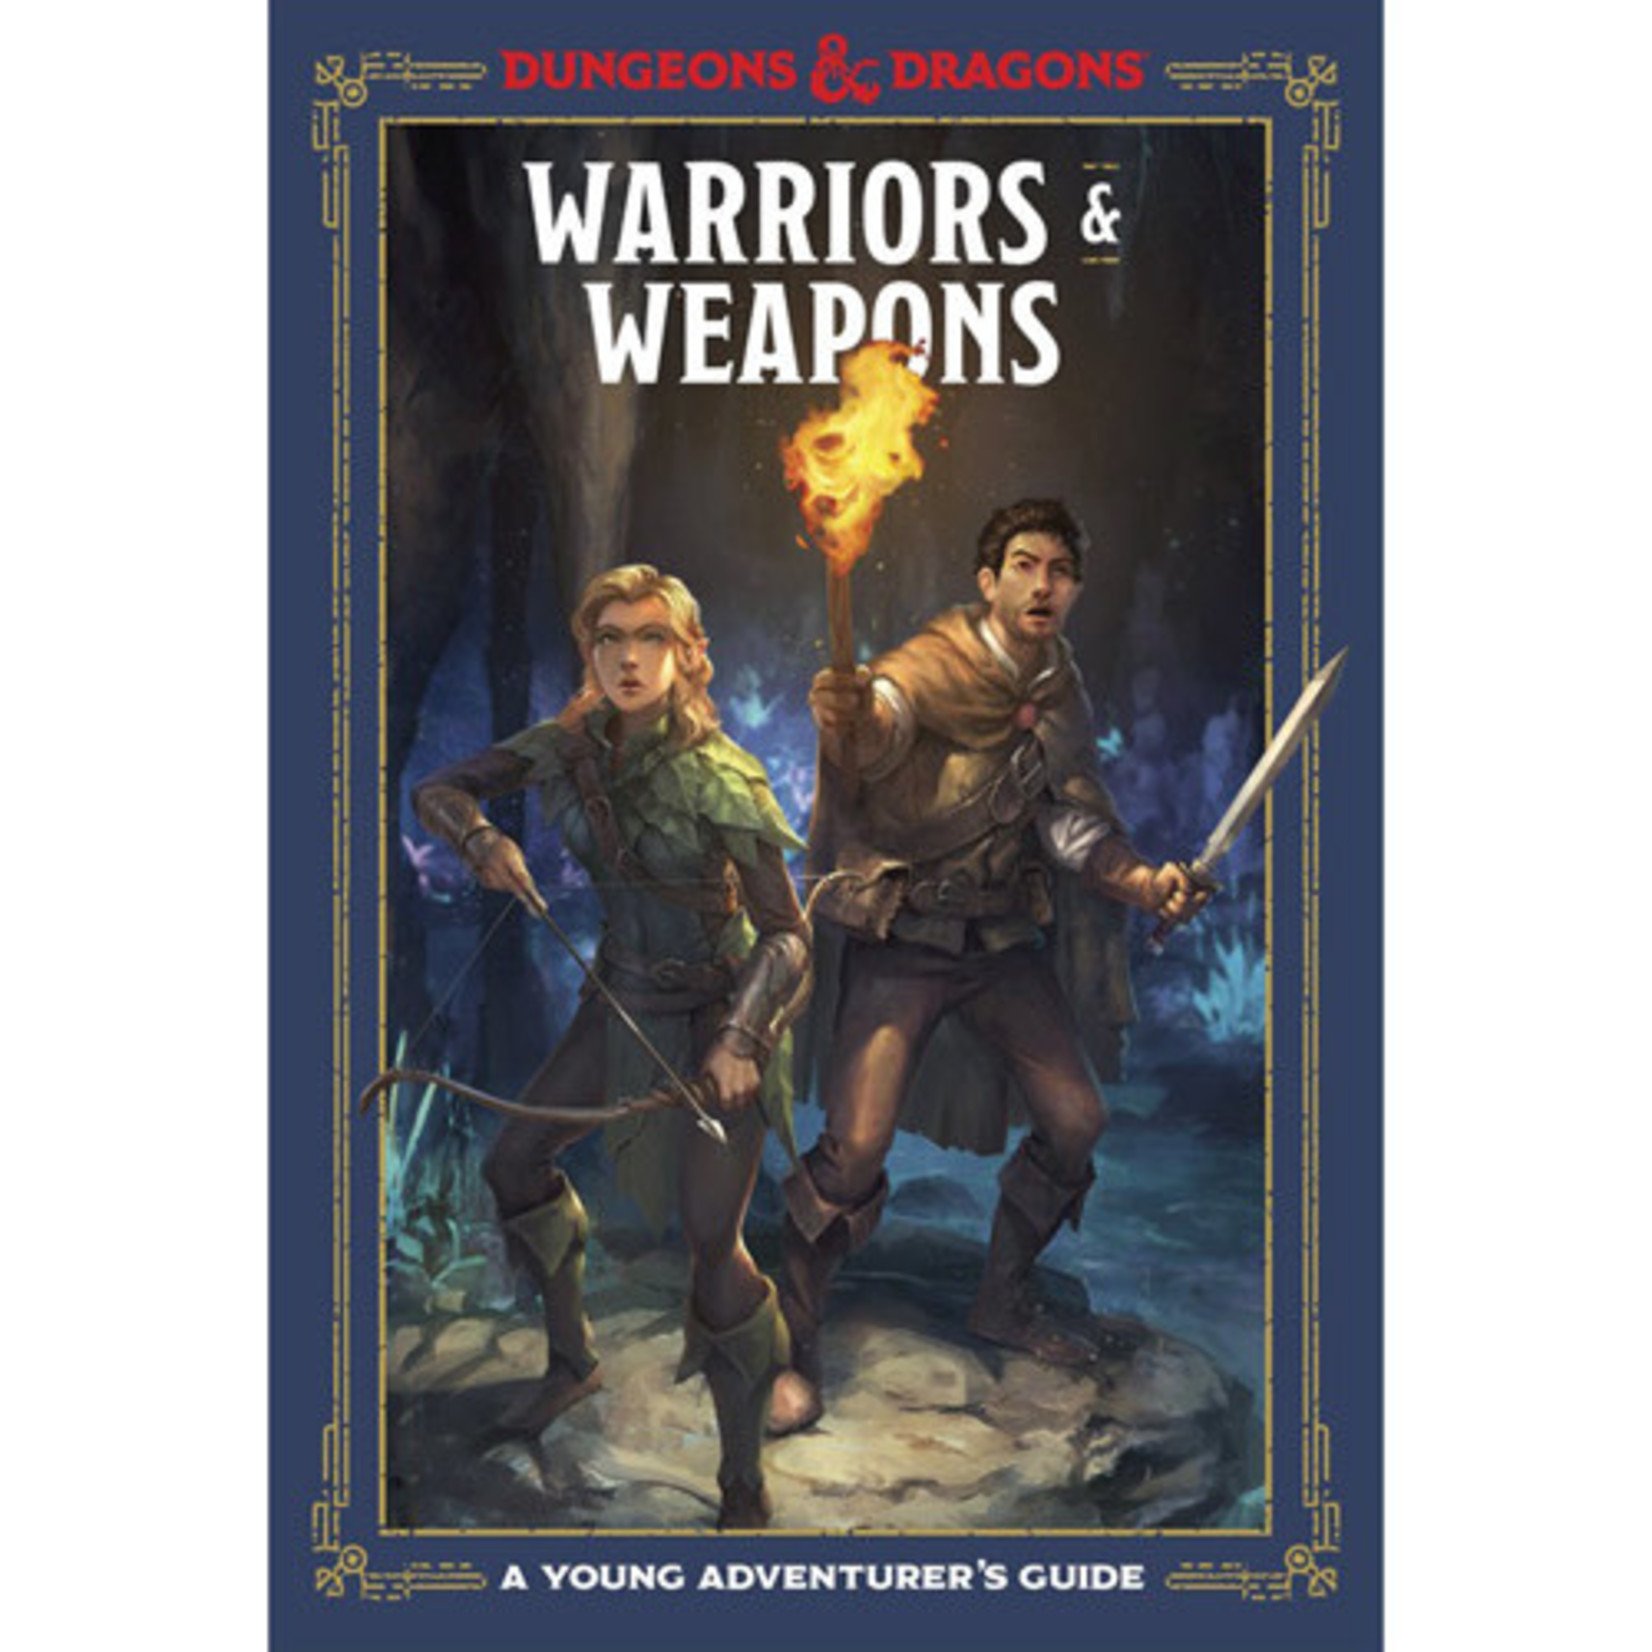 D&D 5E RPG: A Young Adventurer's Guide - Warriors & Weapons